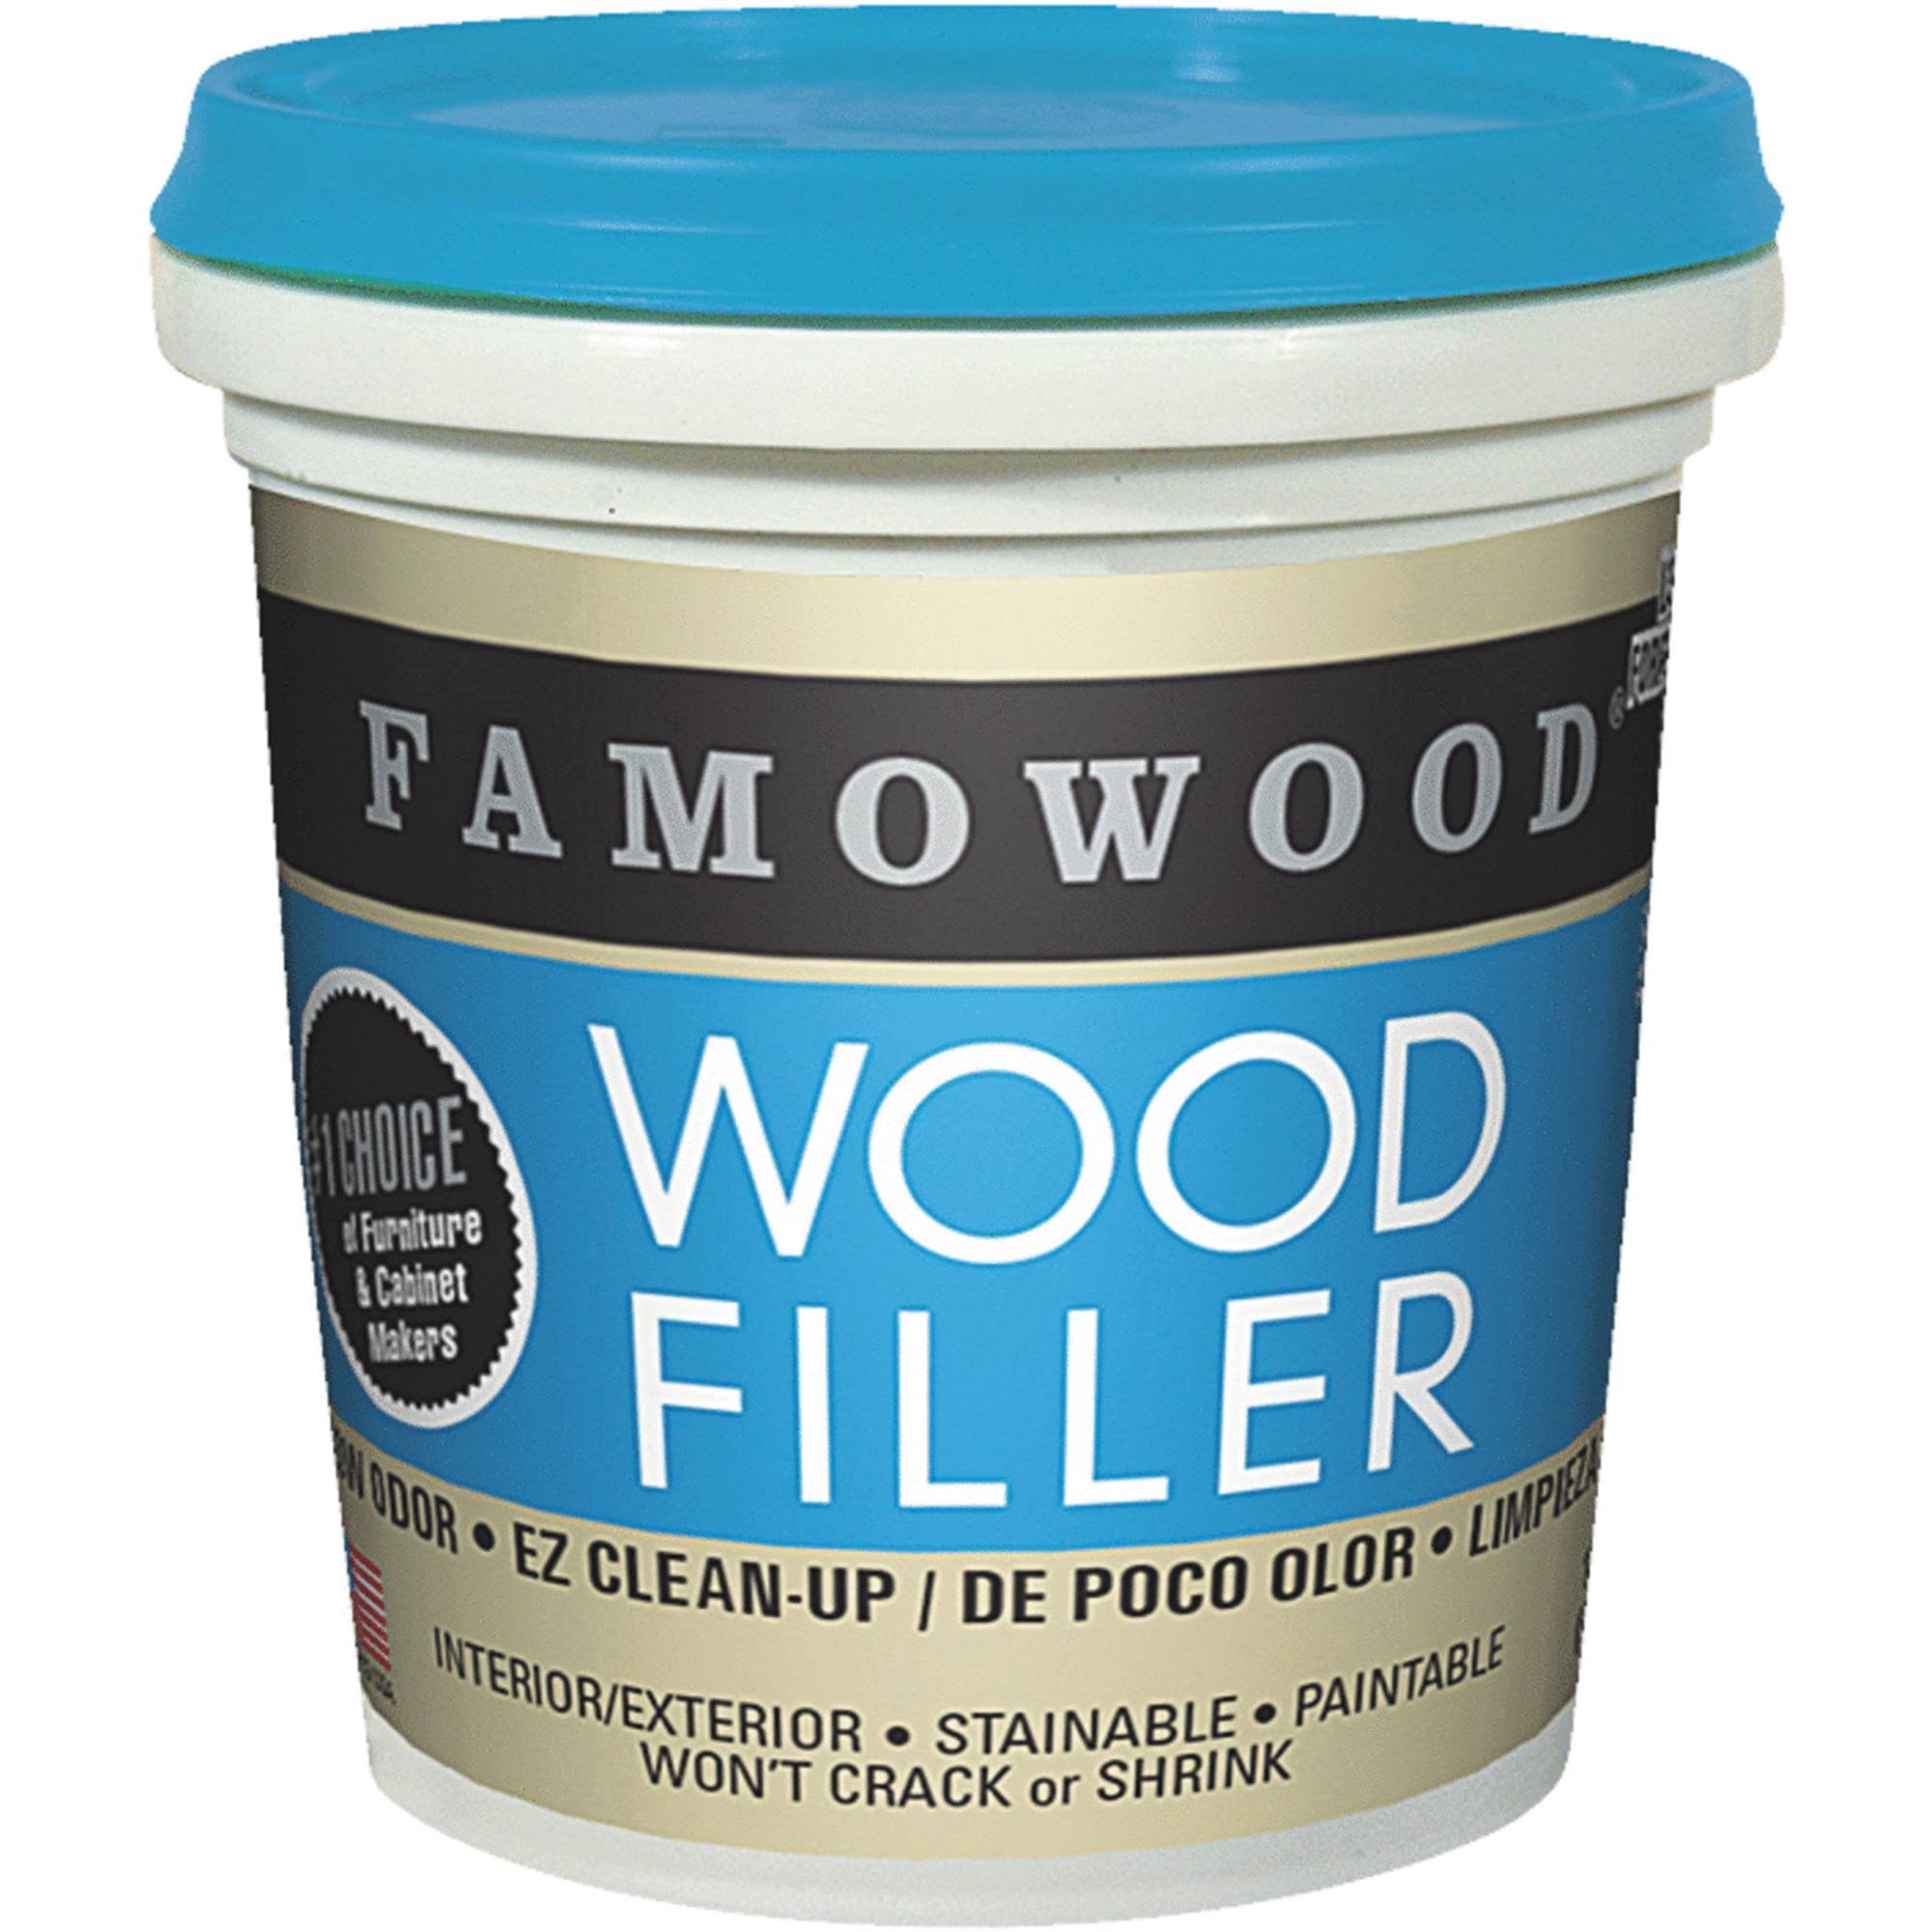 Famowood Water-Based Wood Filler, White 40042148